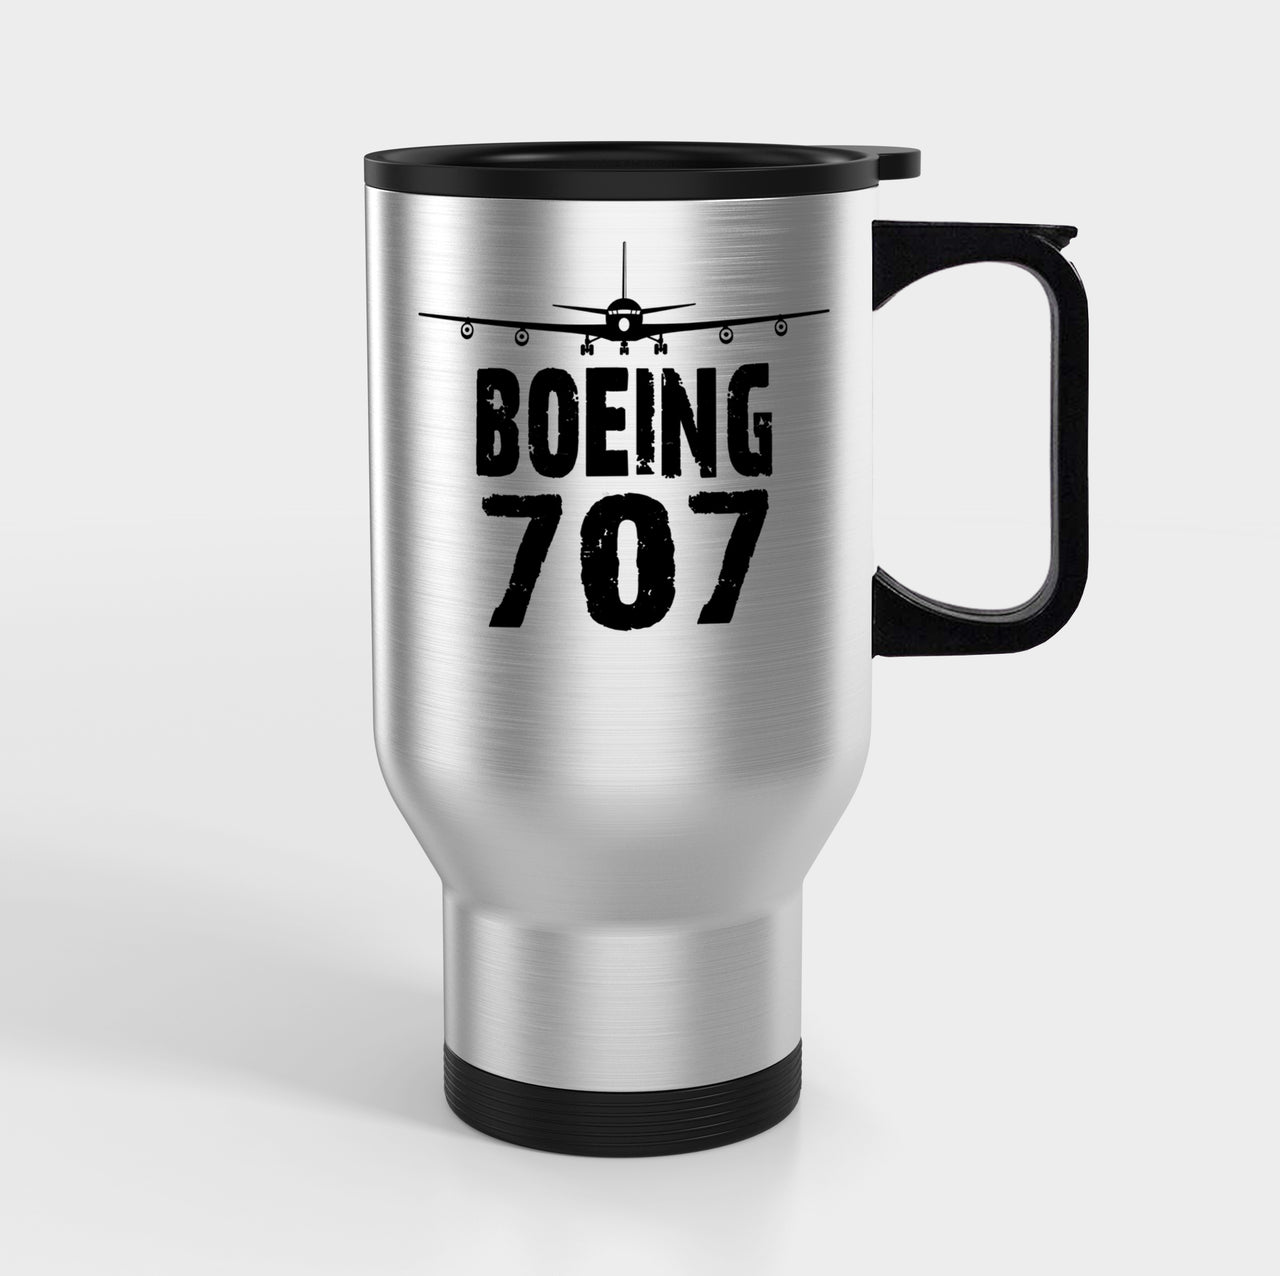 Boeing 707 & Plane Designed Travel Mugs (With Holder)